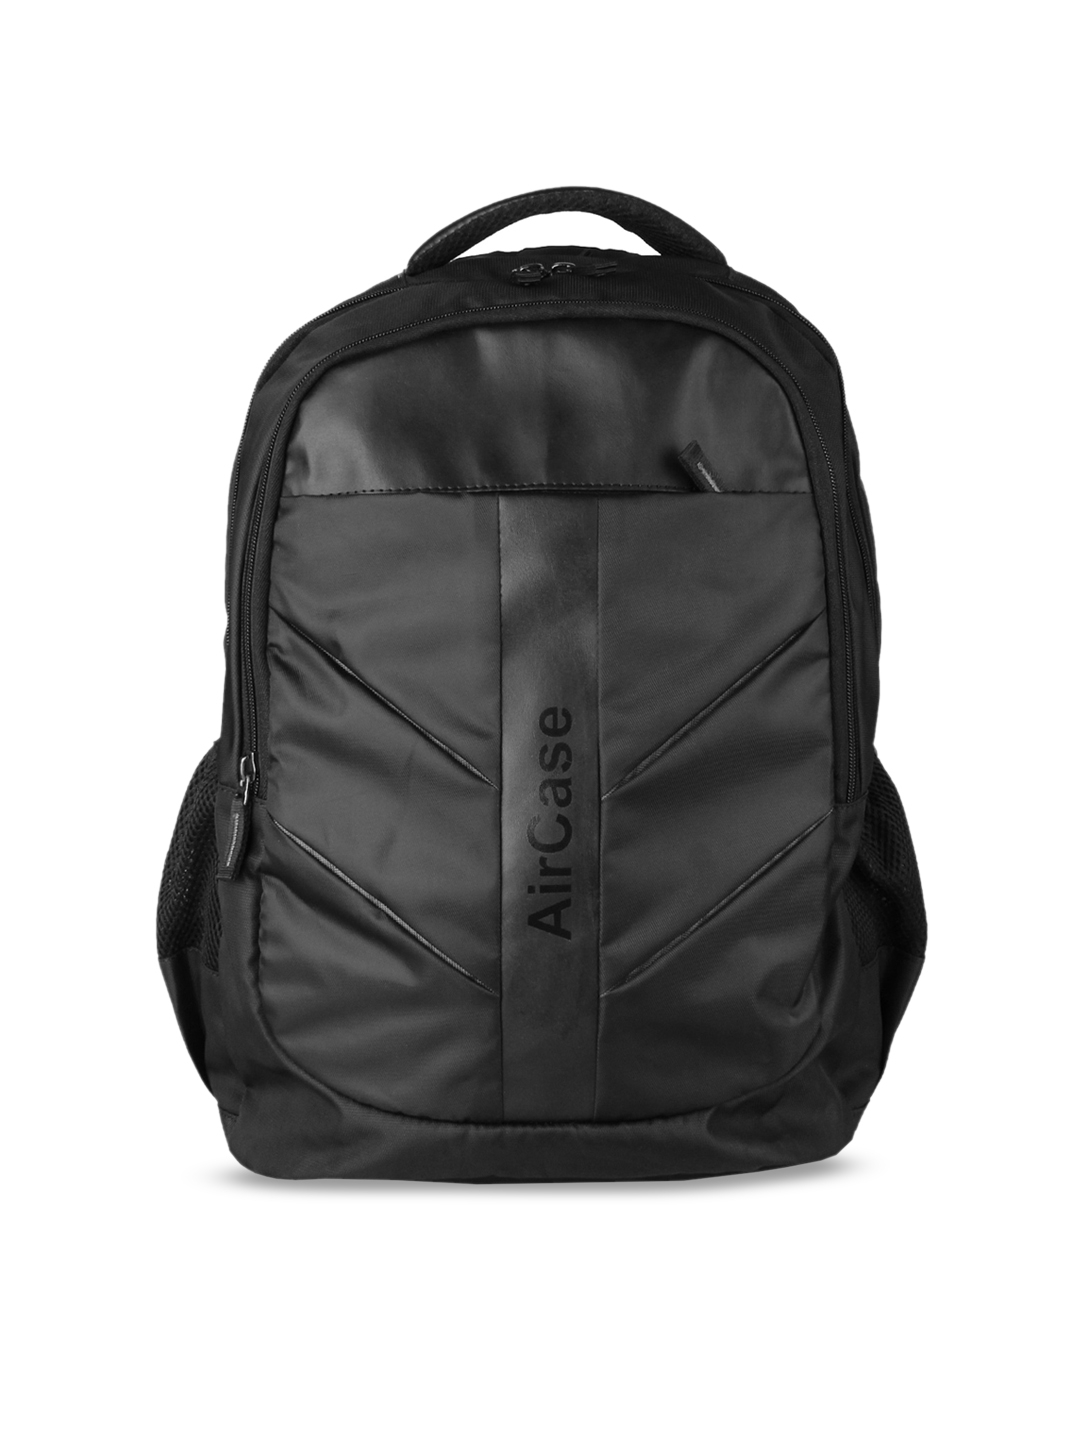 AirCase Unisex Black Backpacks